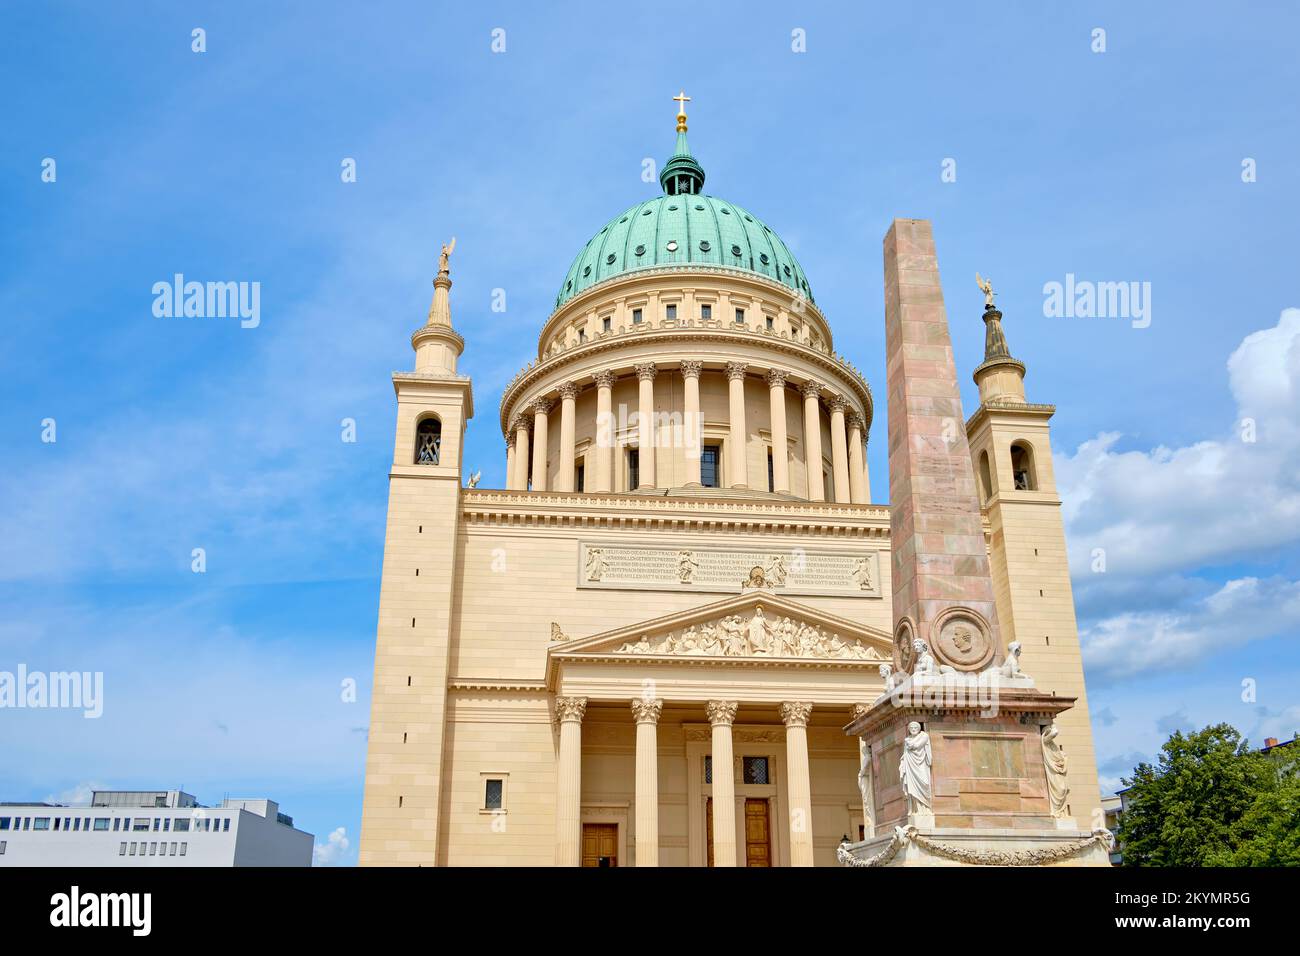 Church of St. Nicholas and Obelisk, Old Market Square in Potsdam, Brandenburg, Germany. Stock Photo